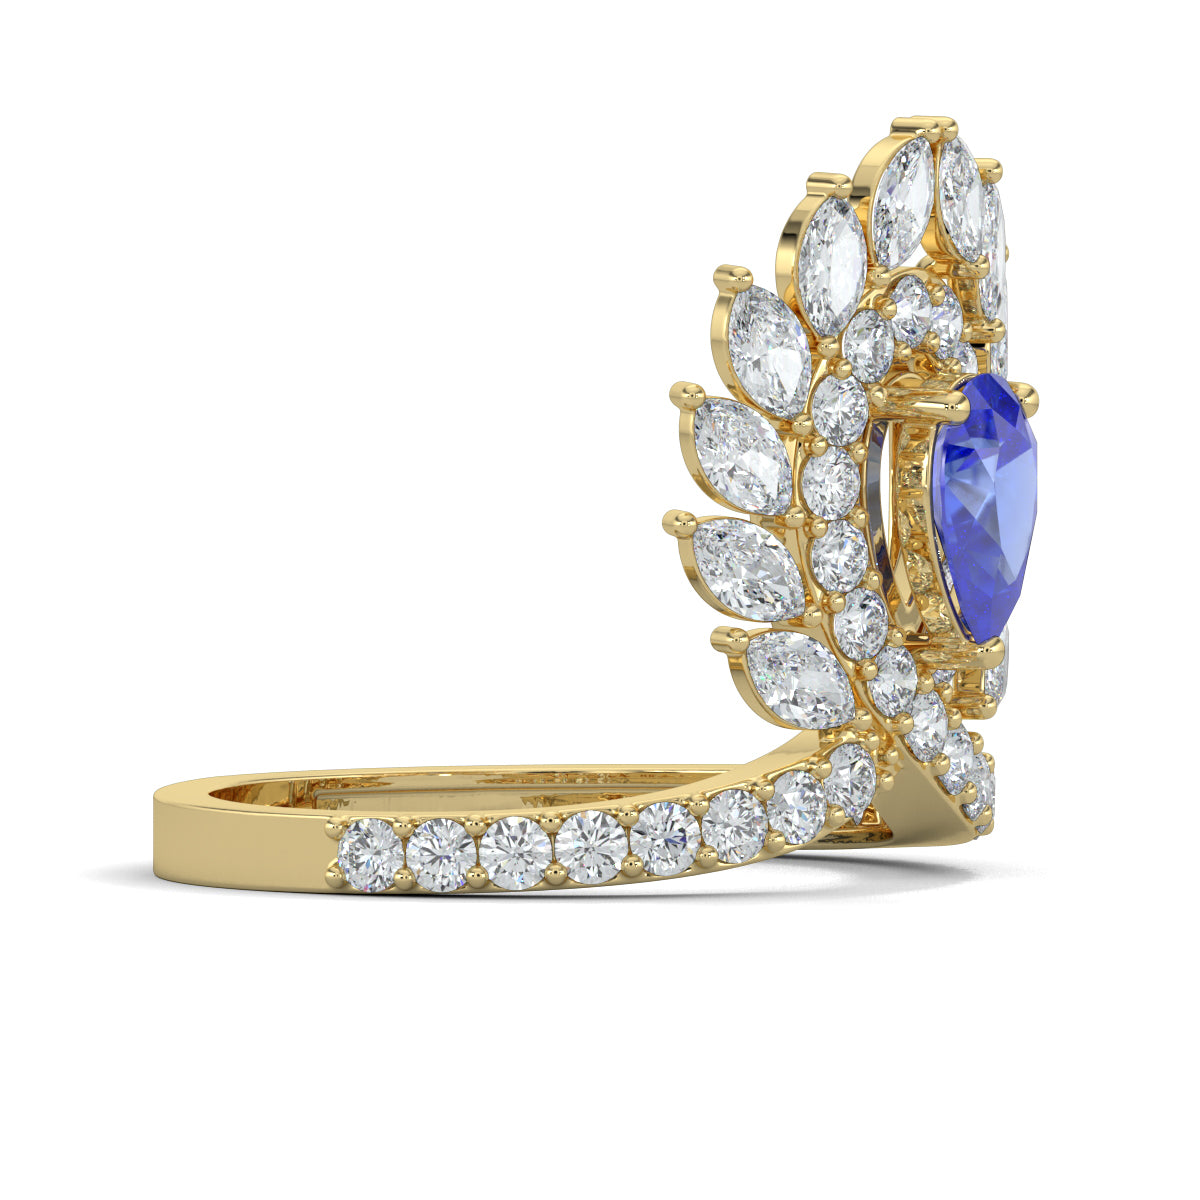 Yellow Gold, Diamond Ring, Natural diamond ring, Majestic plume diamond ring, cocktail ring, lab-grown diamonds, blue sapphire diamond, pear-shaped diamonds, round diamonds, marquise diamonds, luxurious ring, statement jewelry